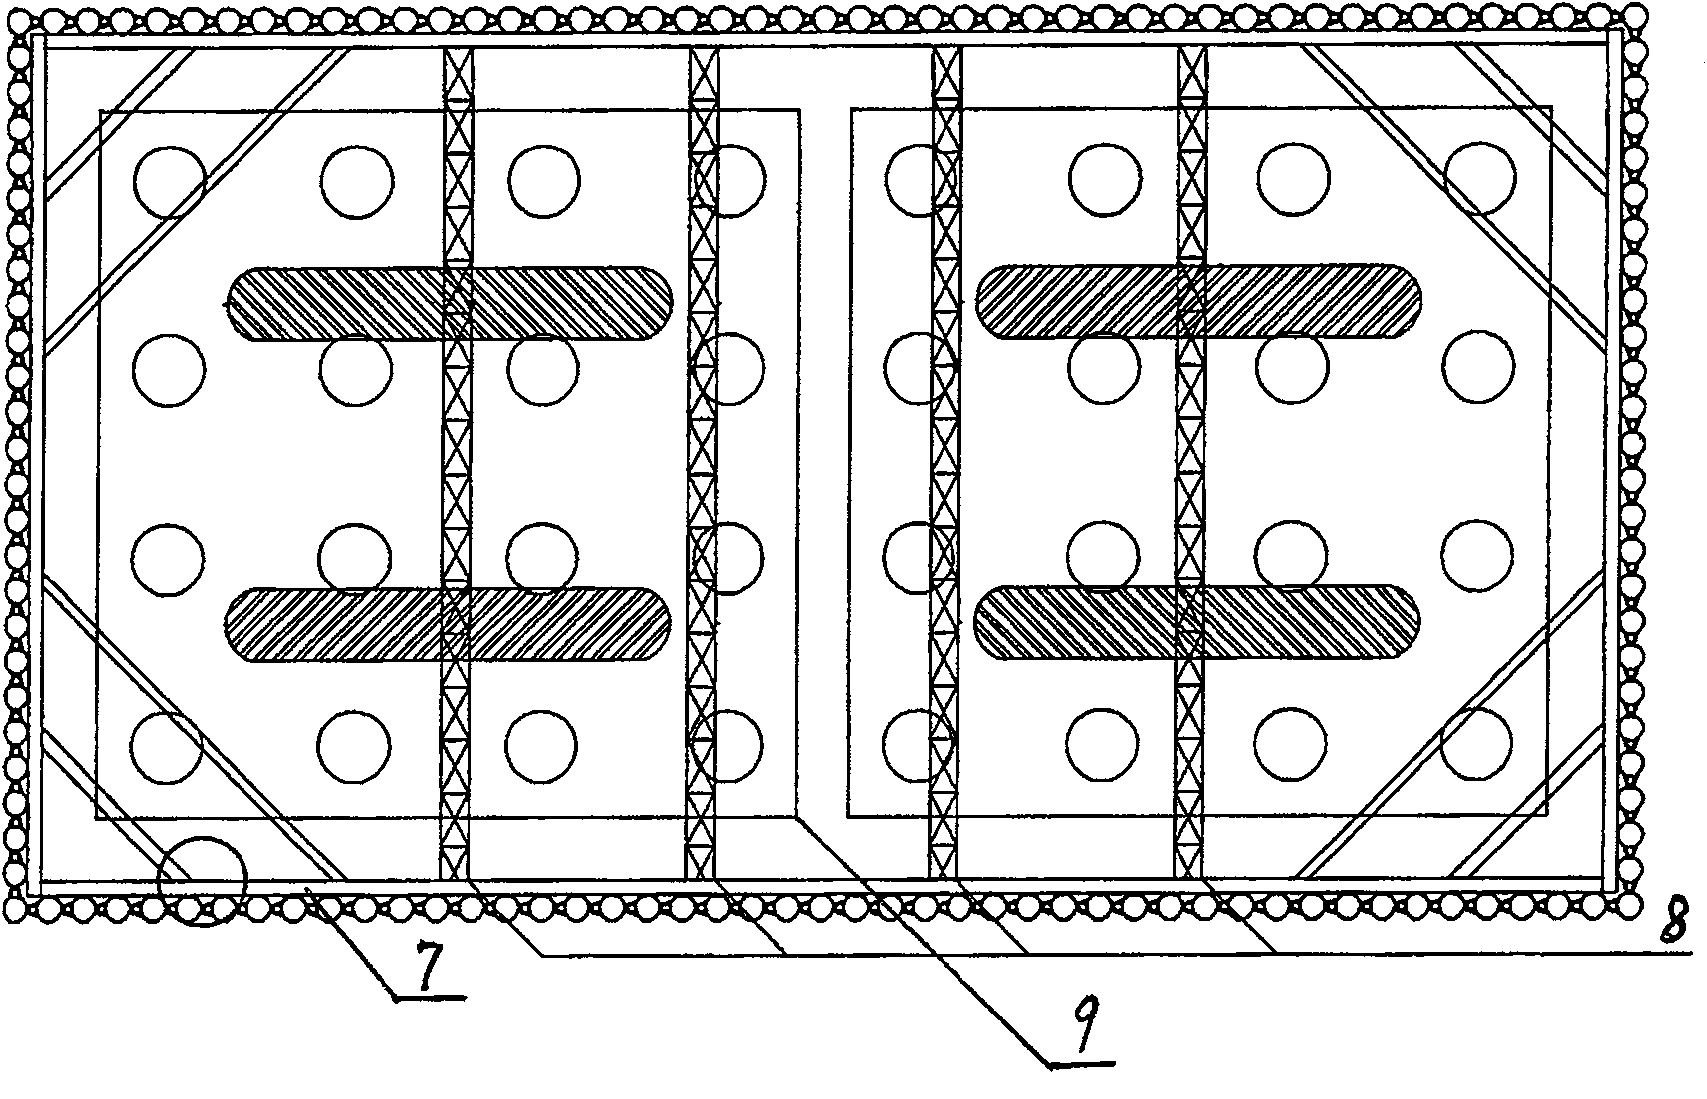 Construction method of opening locked steel tube pilecofferdam